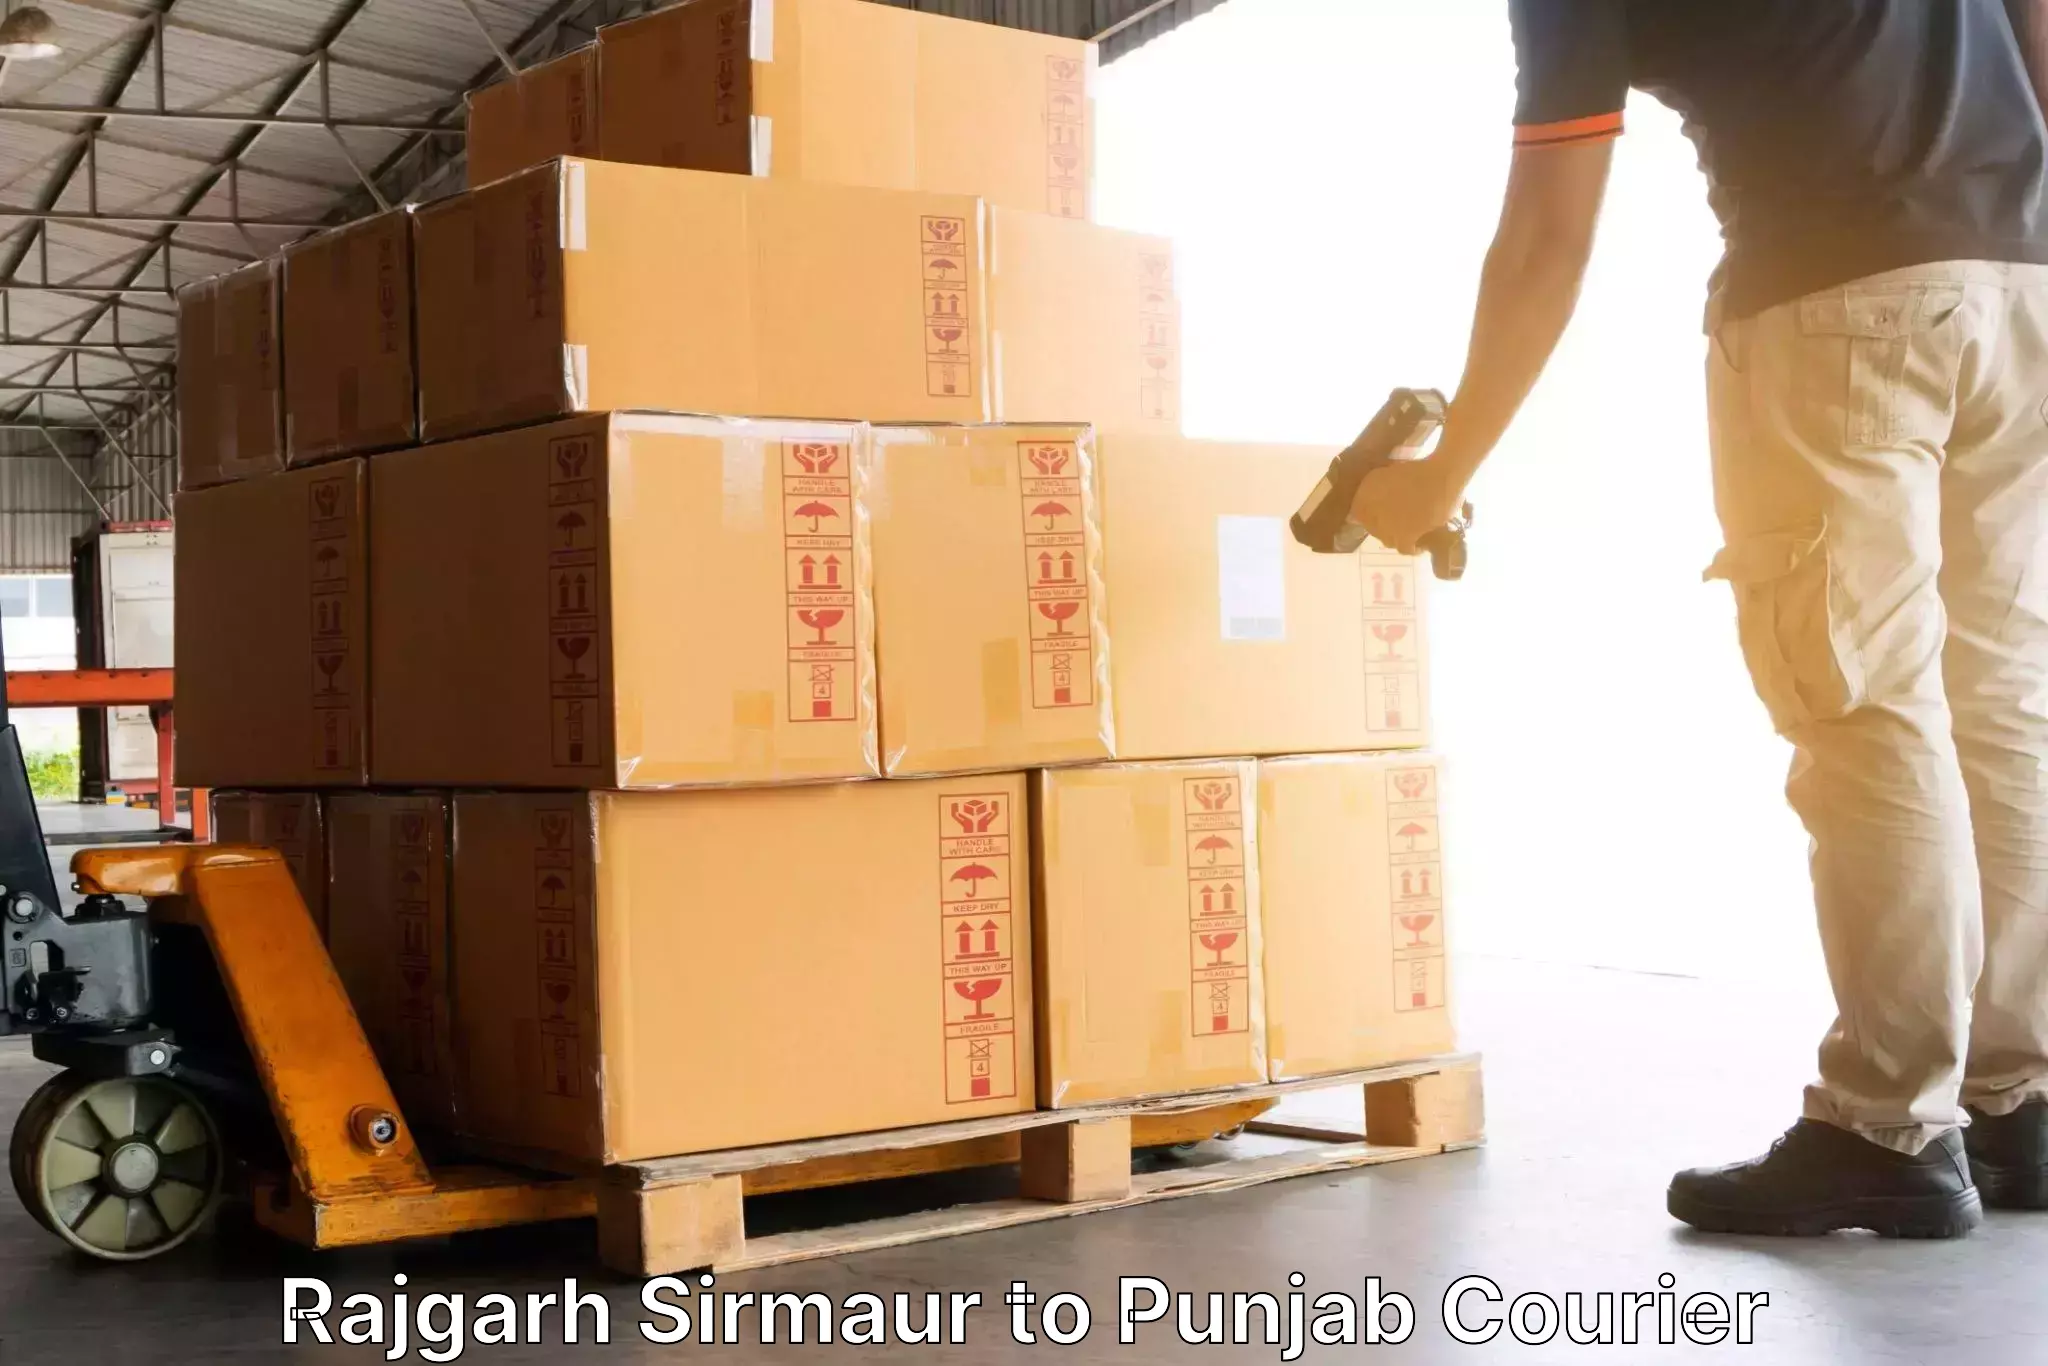 Quick dispatch service Rajgarh Sirmaur to Fatehgarh Sahib